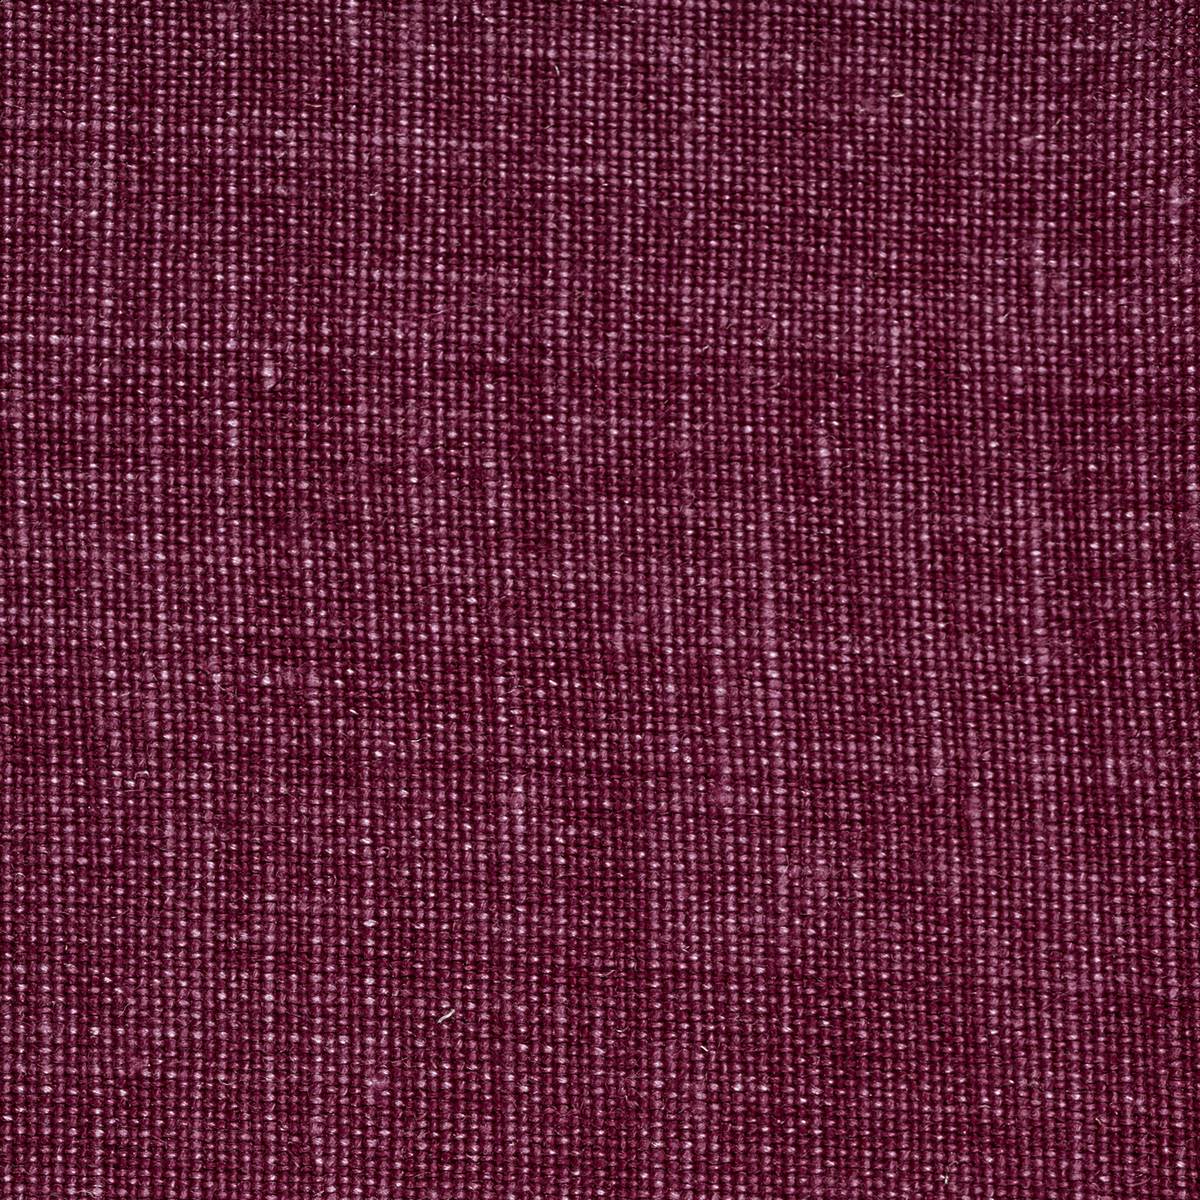 Cybele Cochineal Fabric by Zoffany